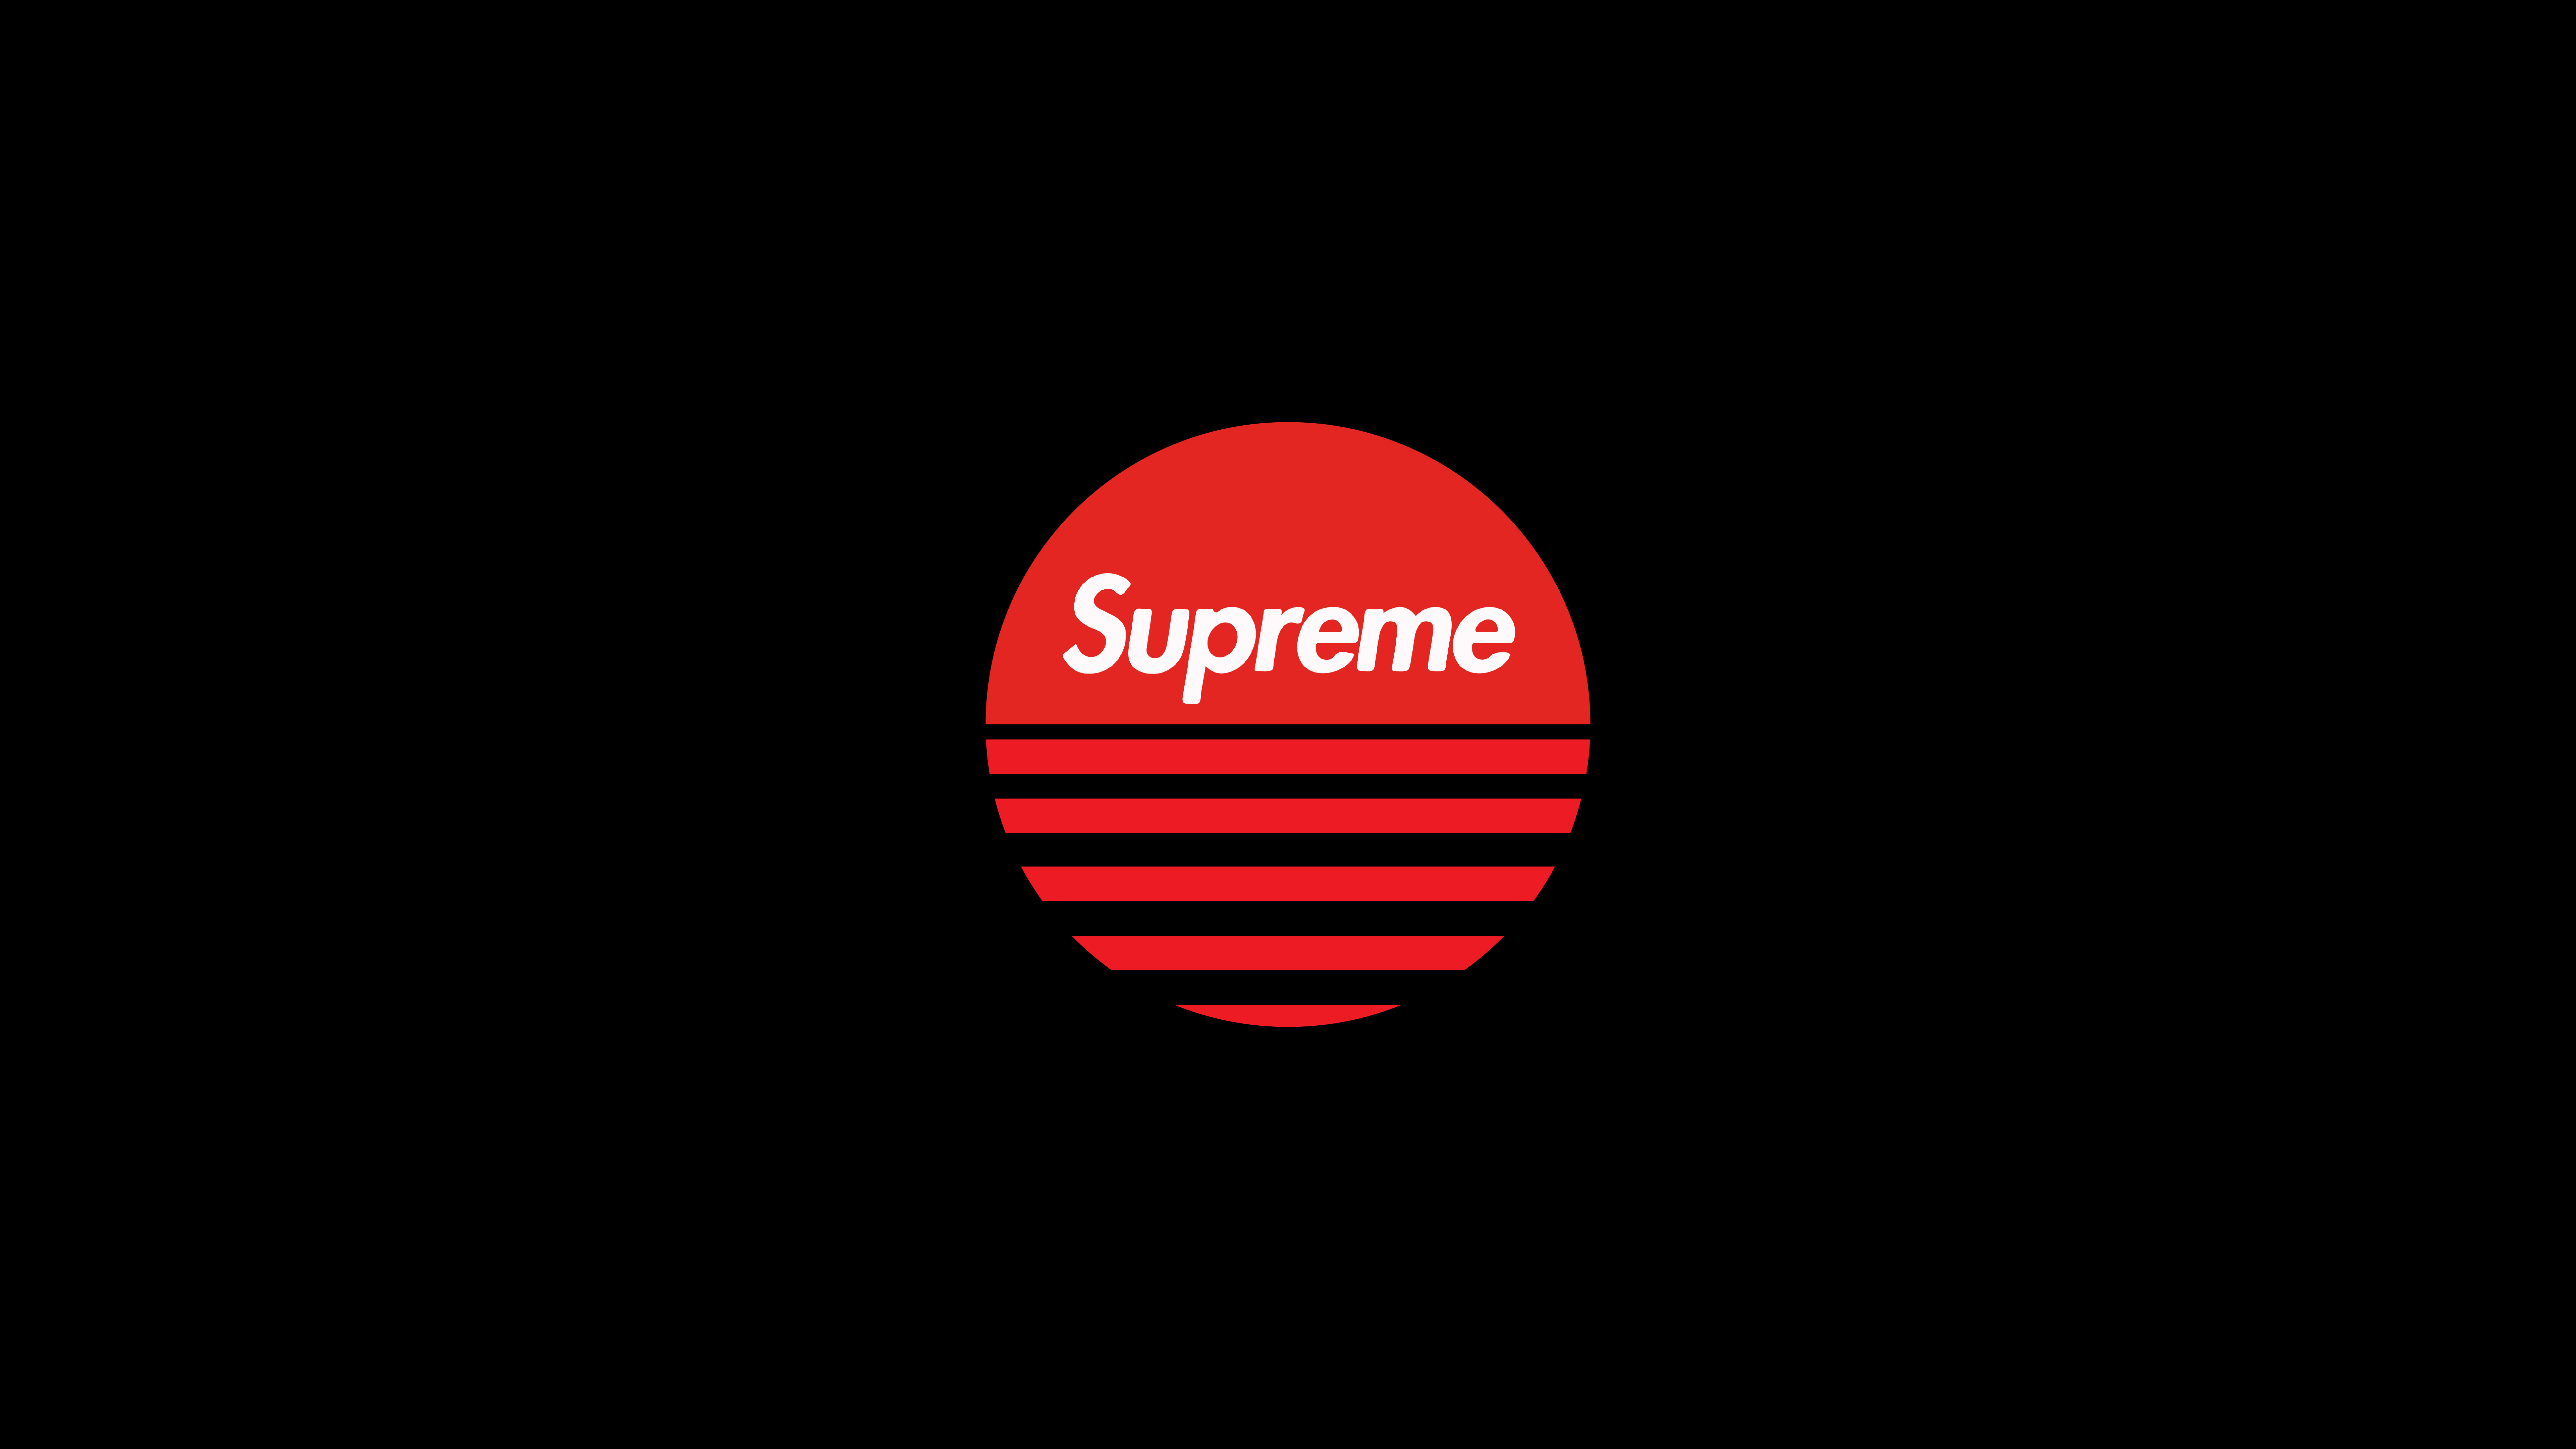 HD supreme logo wallpapers